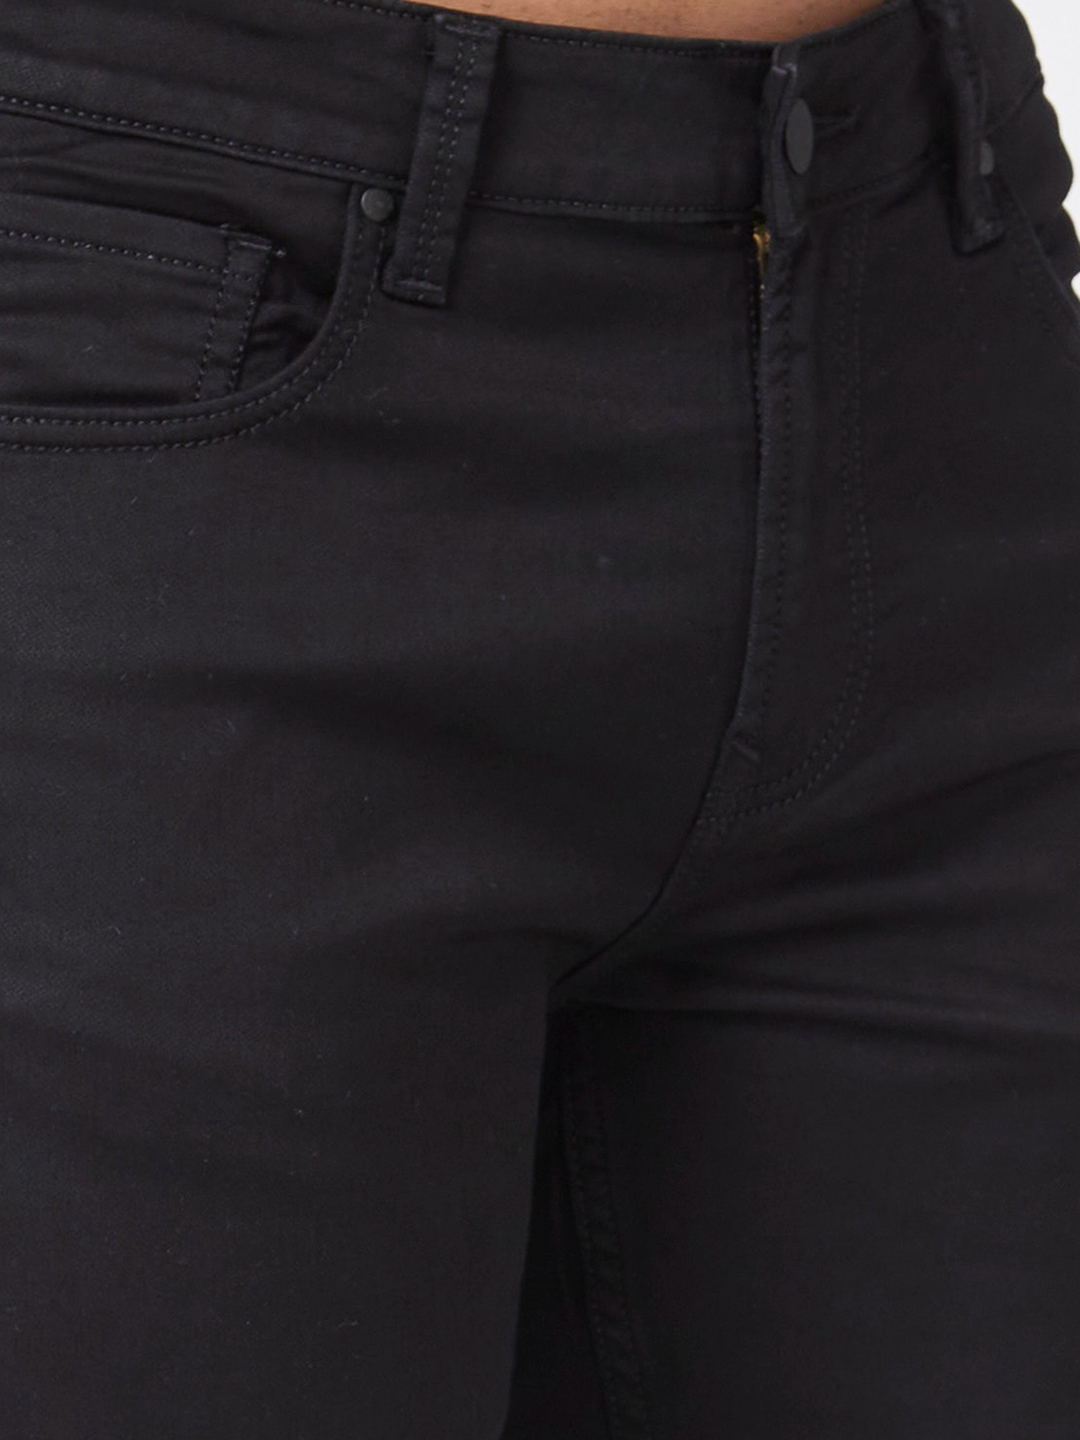 spykar | Spykar Men Black Cotton Stretch Super Slim Fit Tapered Length Clean Look Low Rise Jeans (Super Skinny) 5